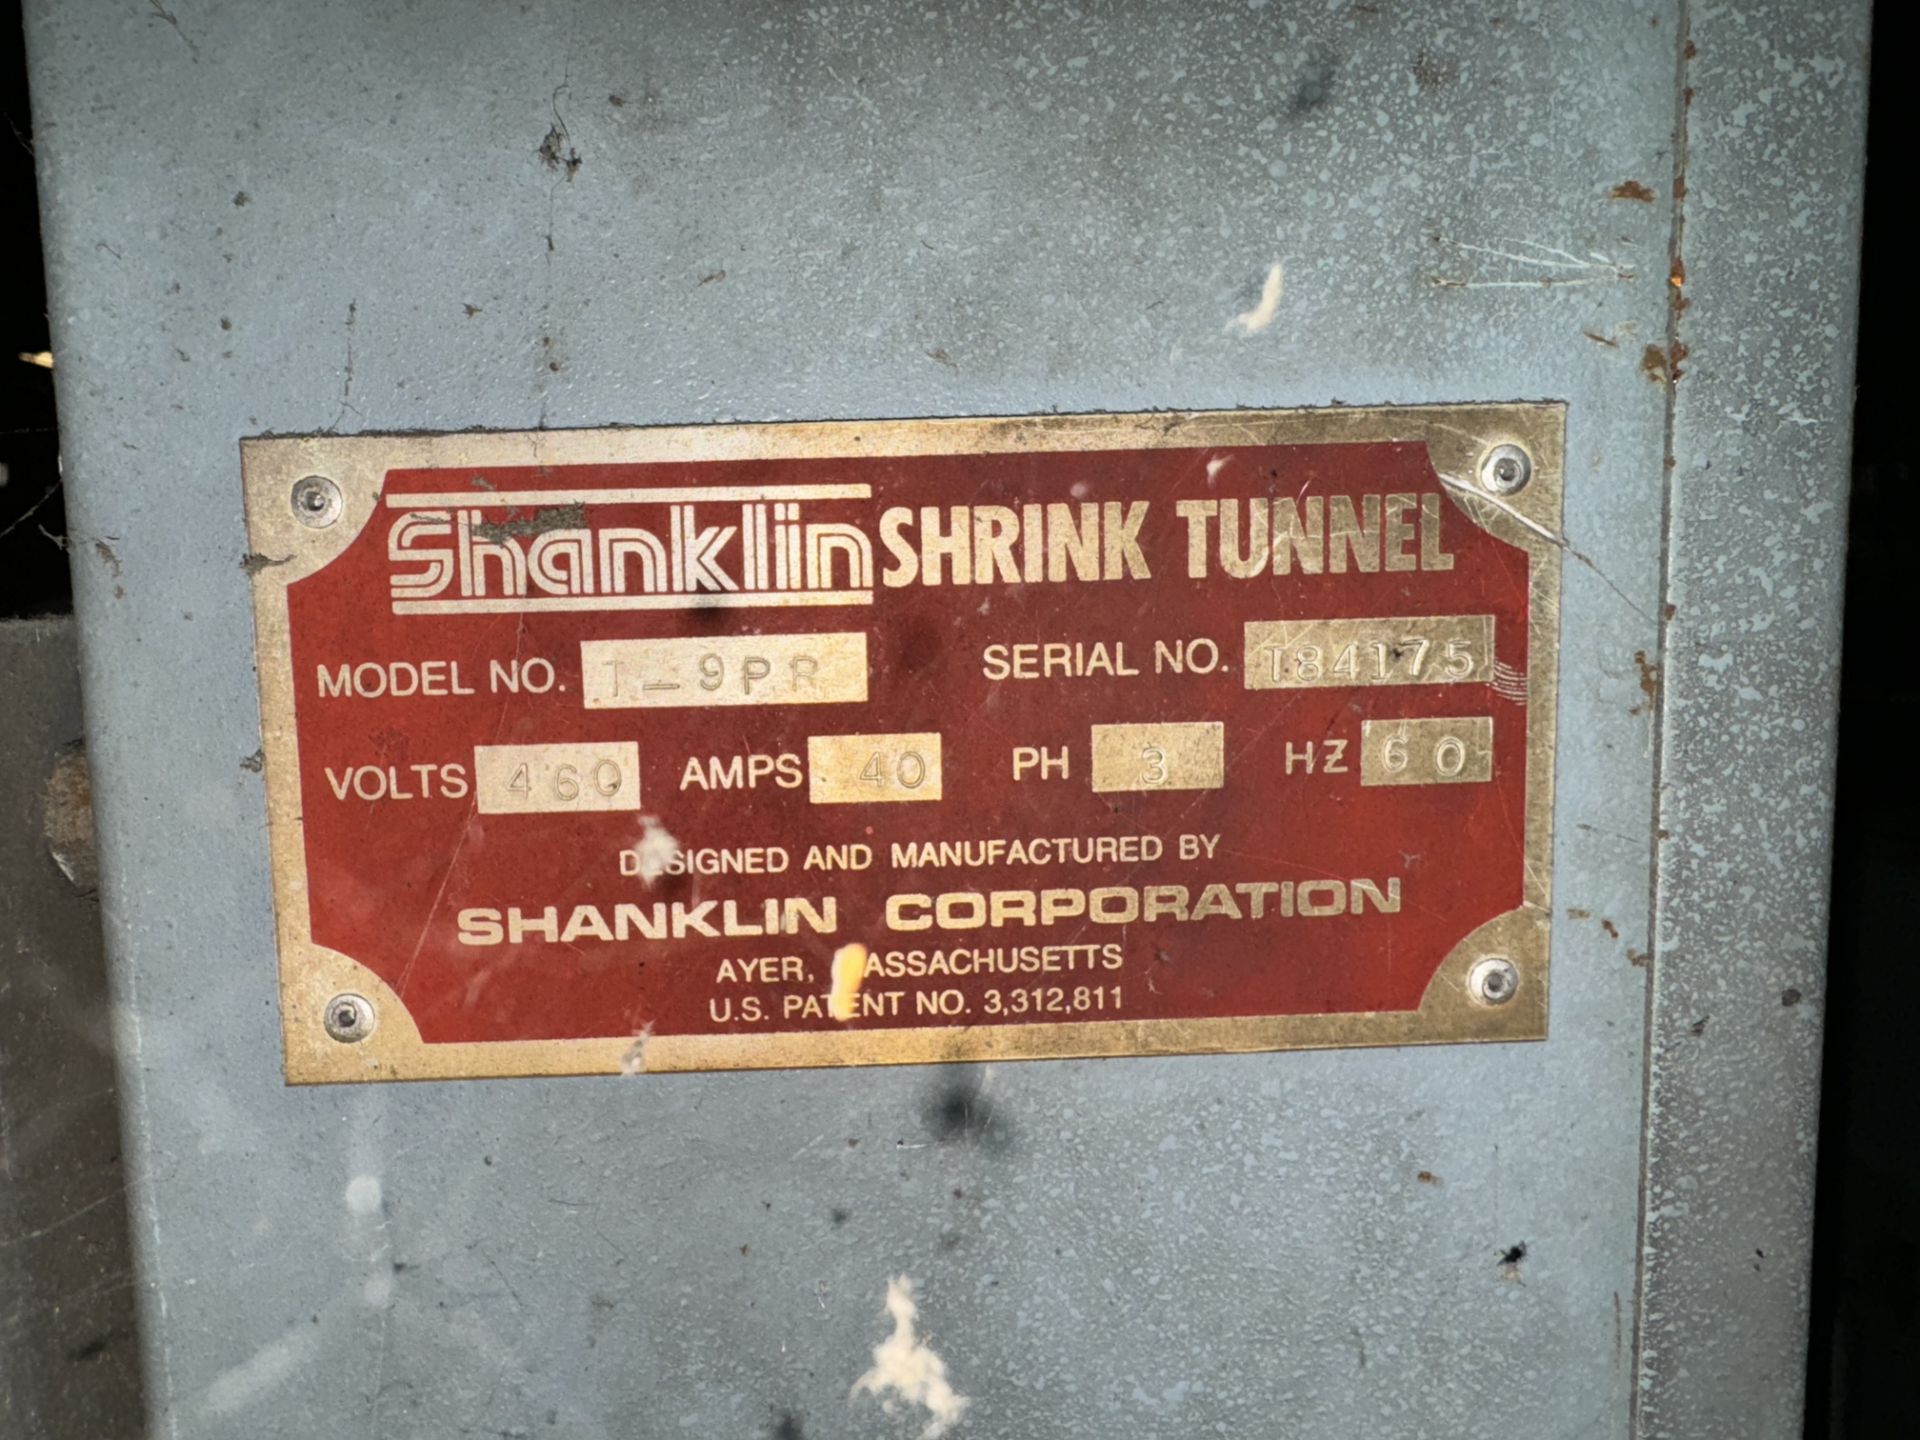 Shanklin Wrapper and Shrink Tunnel, Model# B2BB, Serial# B9412, Model# T-9PR, Serial# T84175, - Image 3 of 4